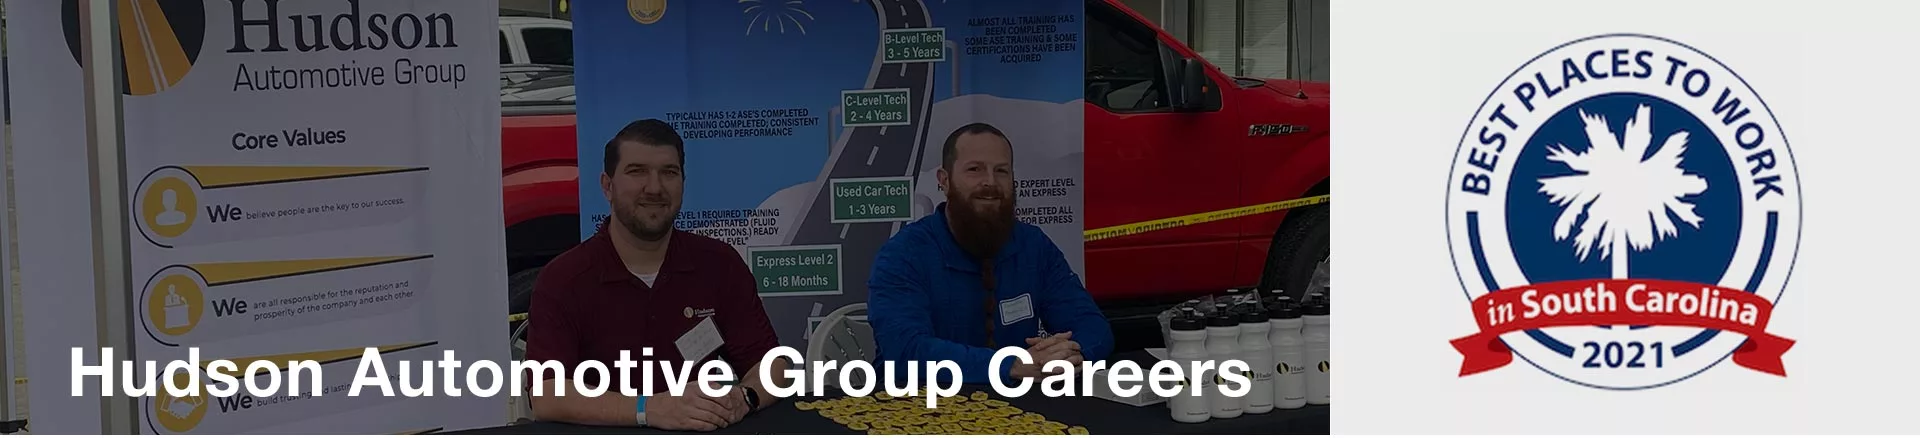 Hudson Automotive Group Careers